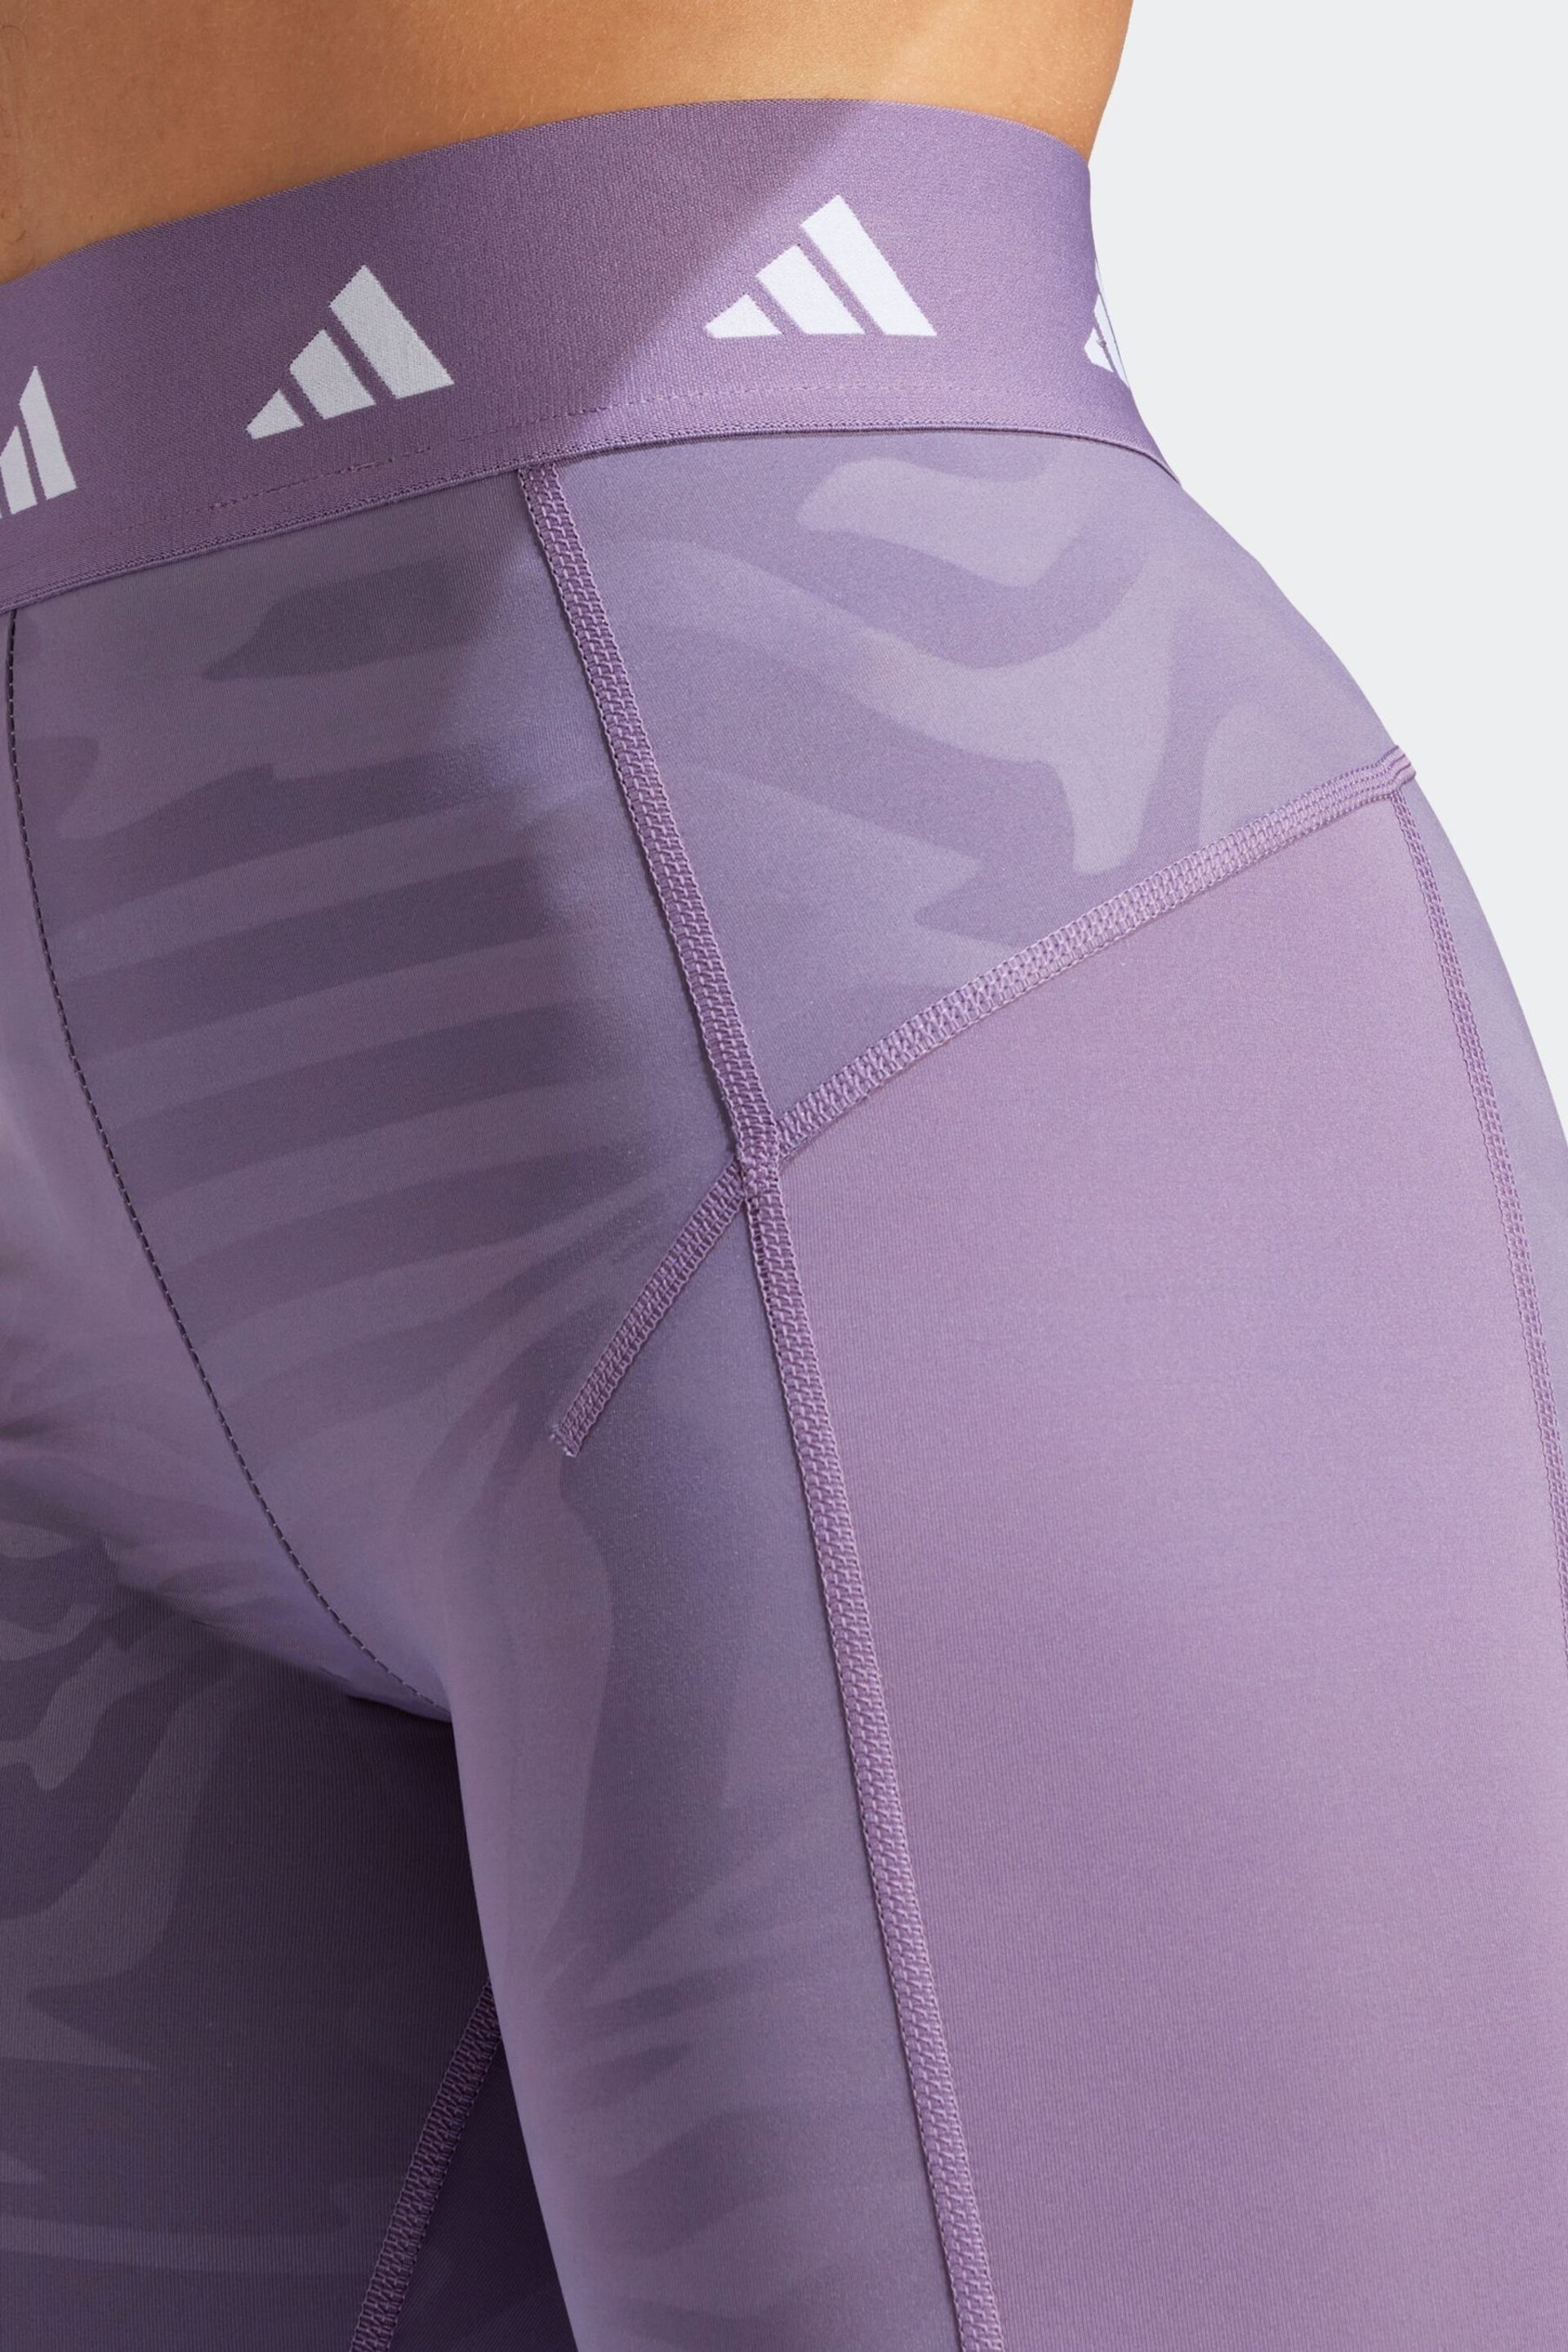 adidas Purple Techfit Printed 7/8 Leggings - Image 4 of 8